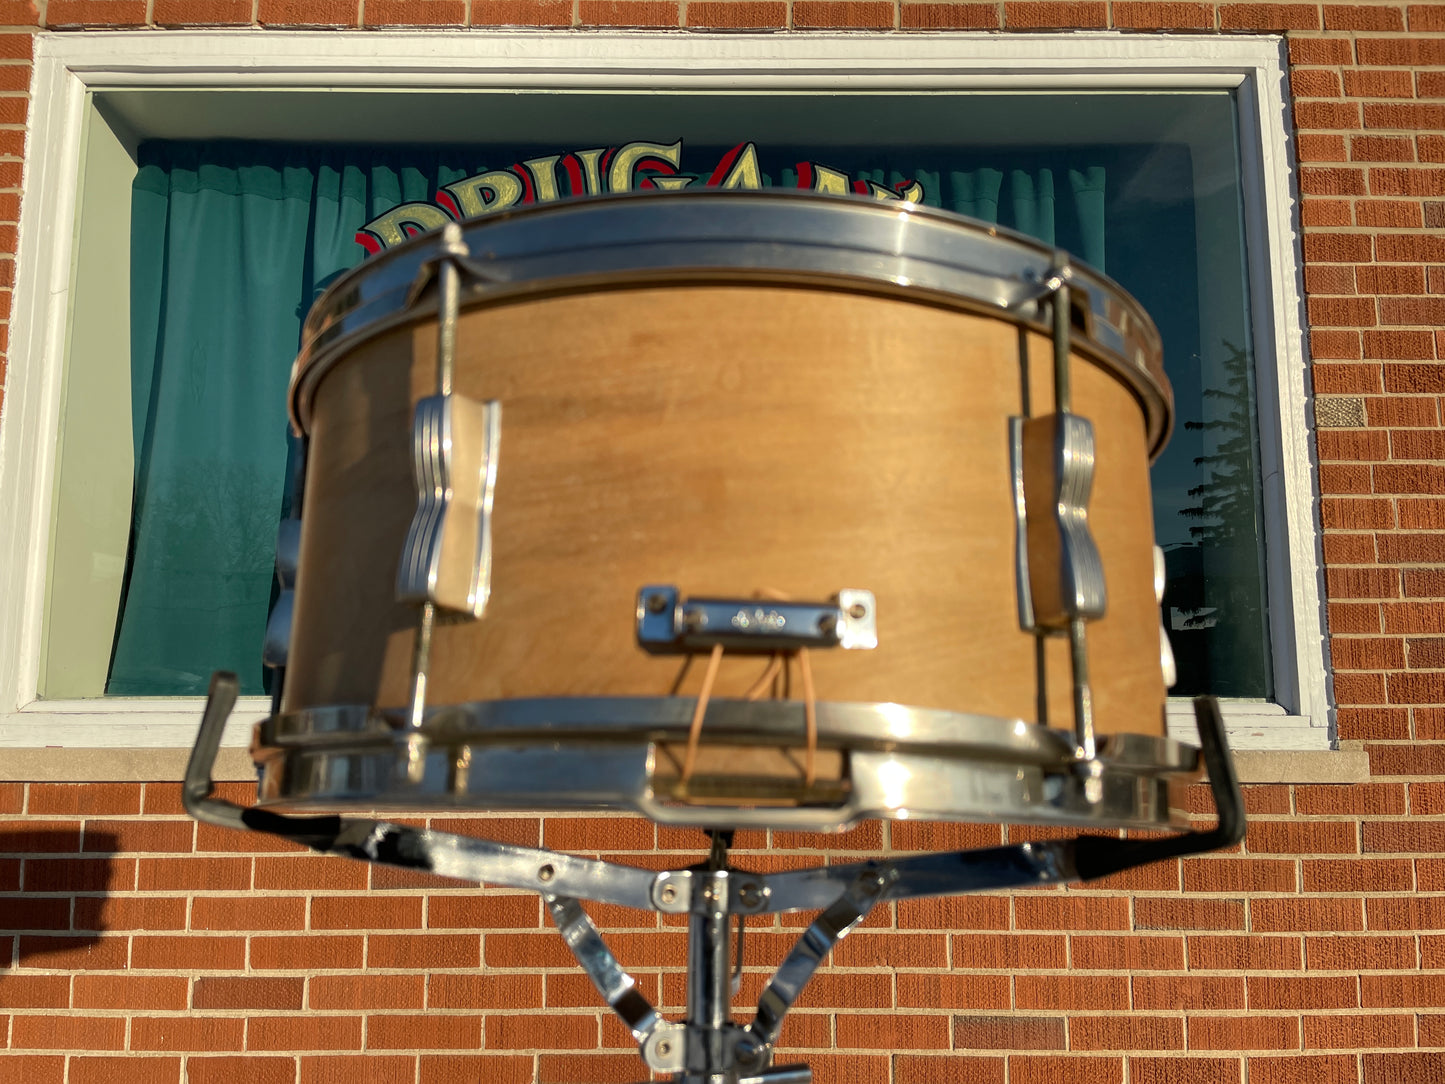 1949-56 WFL No. 490 6.5x14 Supreme Concert Snare Drum